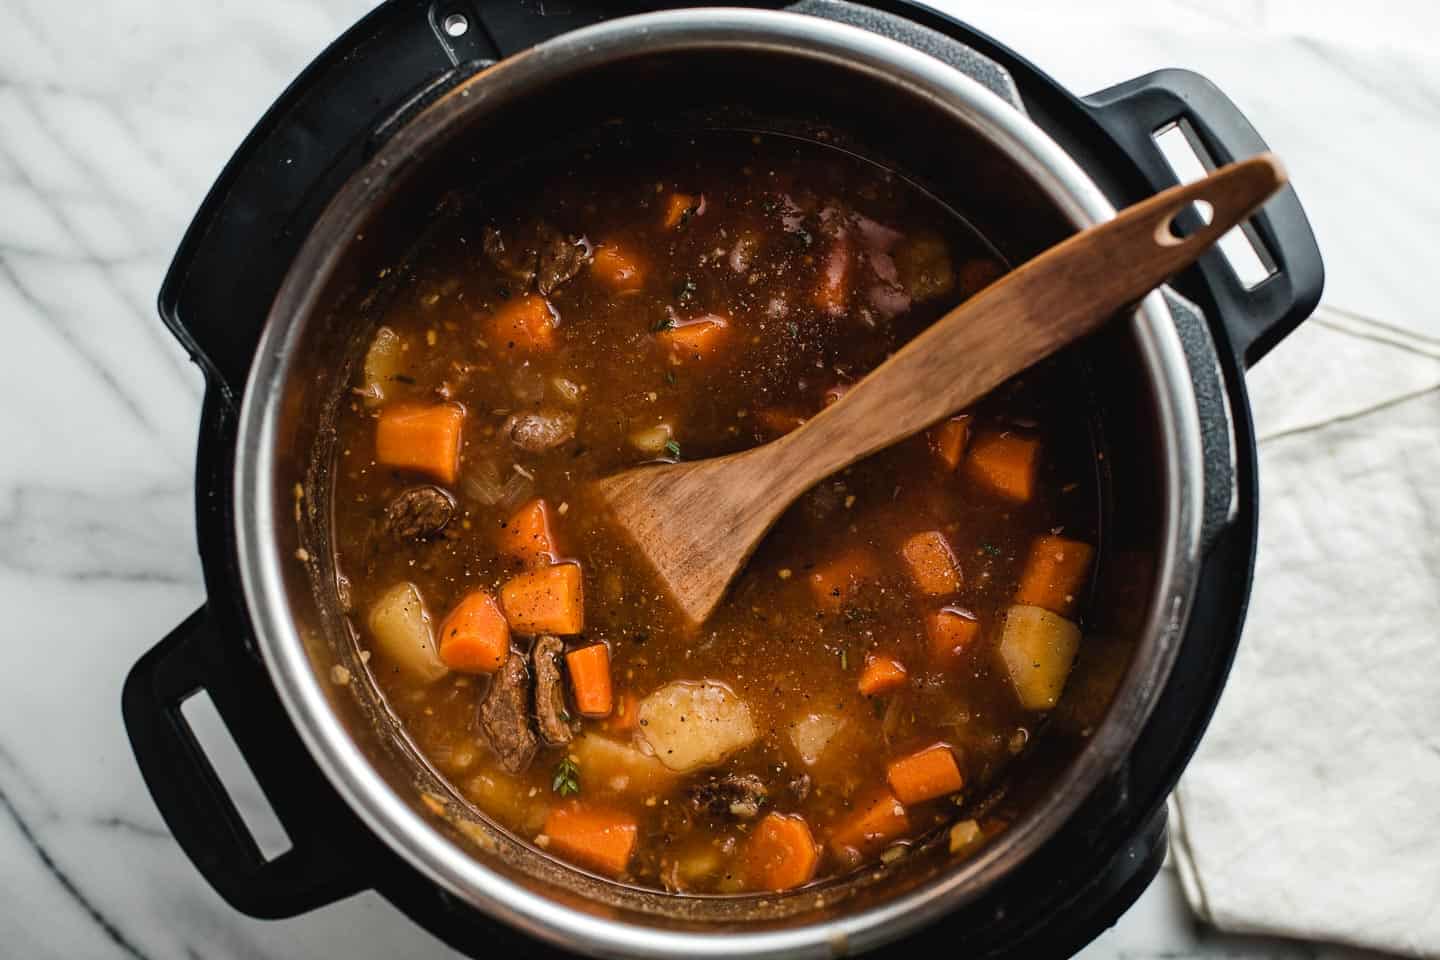 Thickening the stew with a cornstarch slurry.